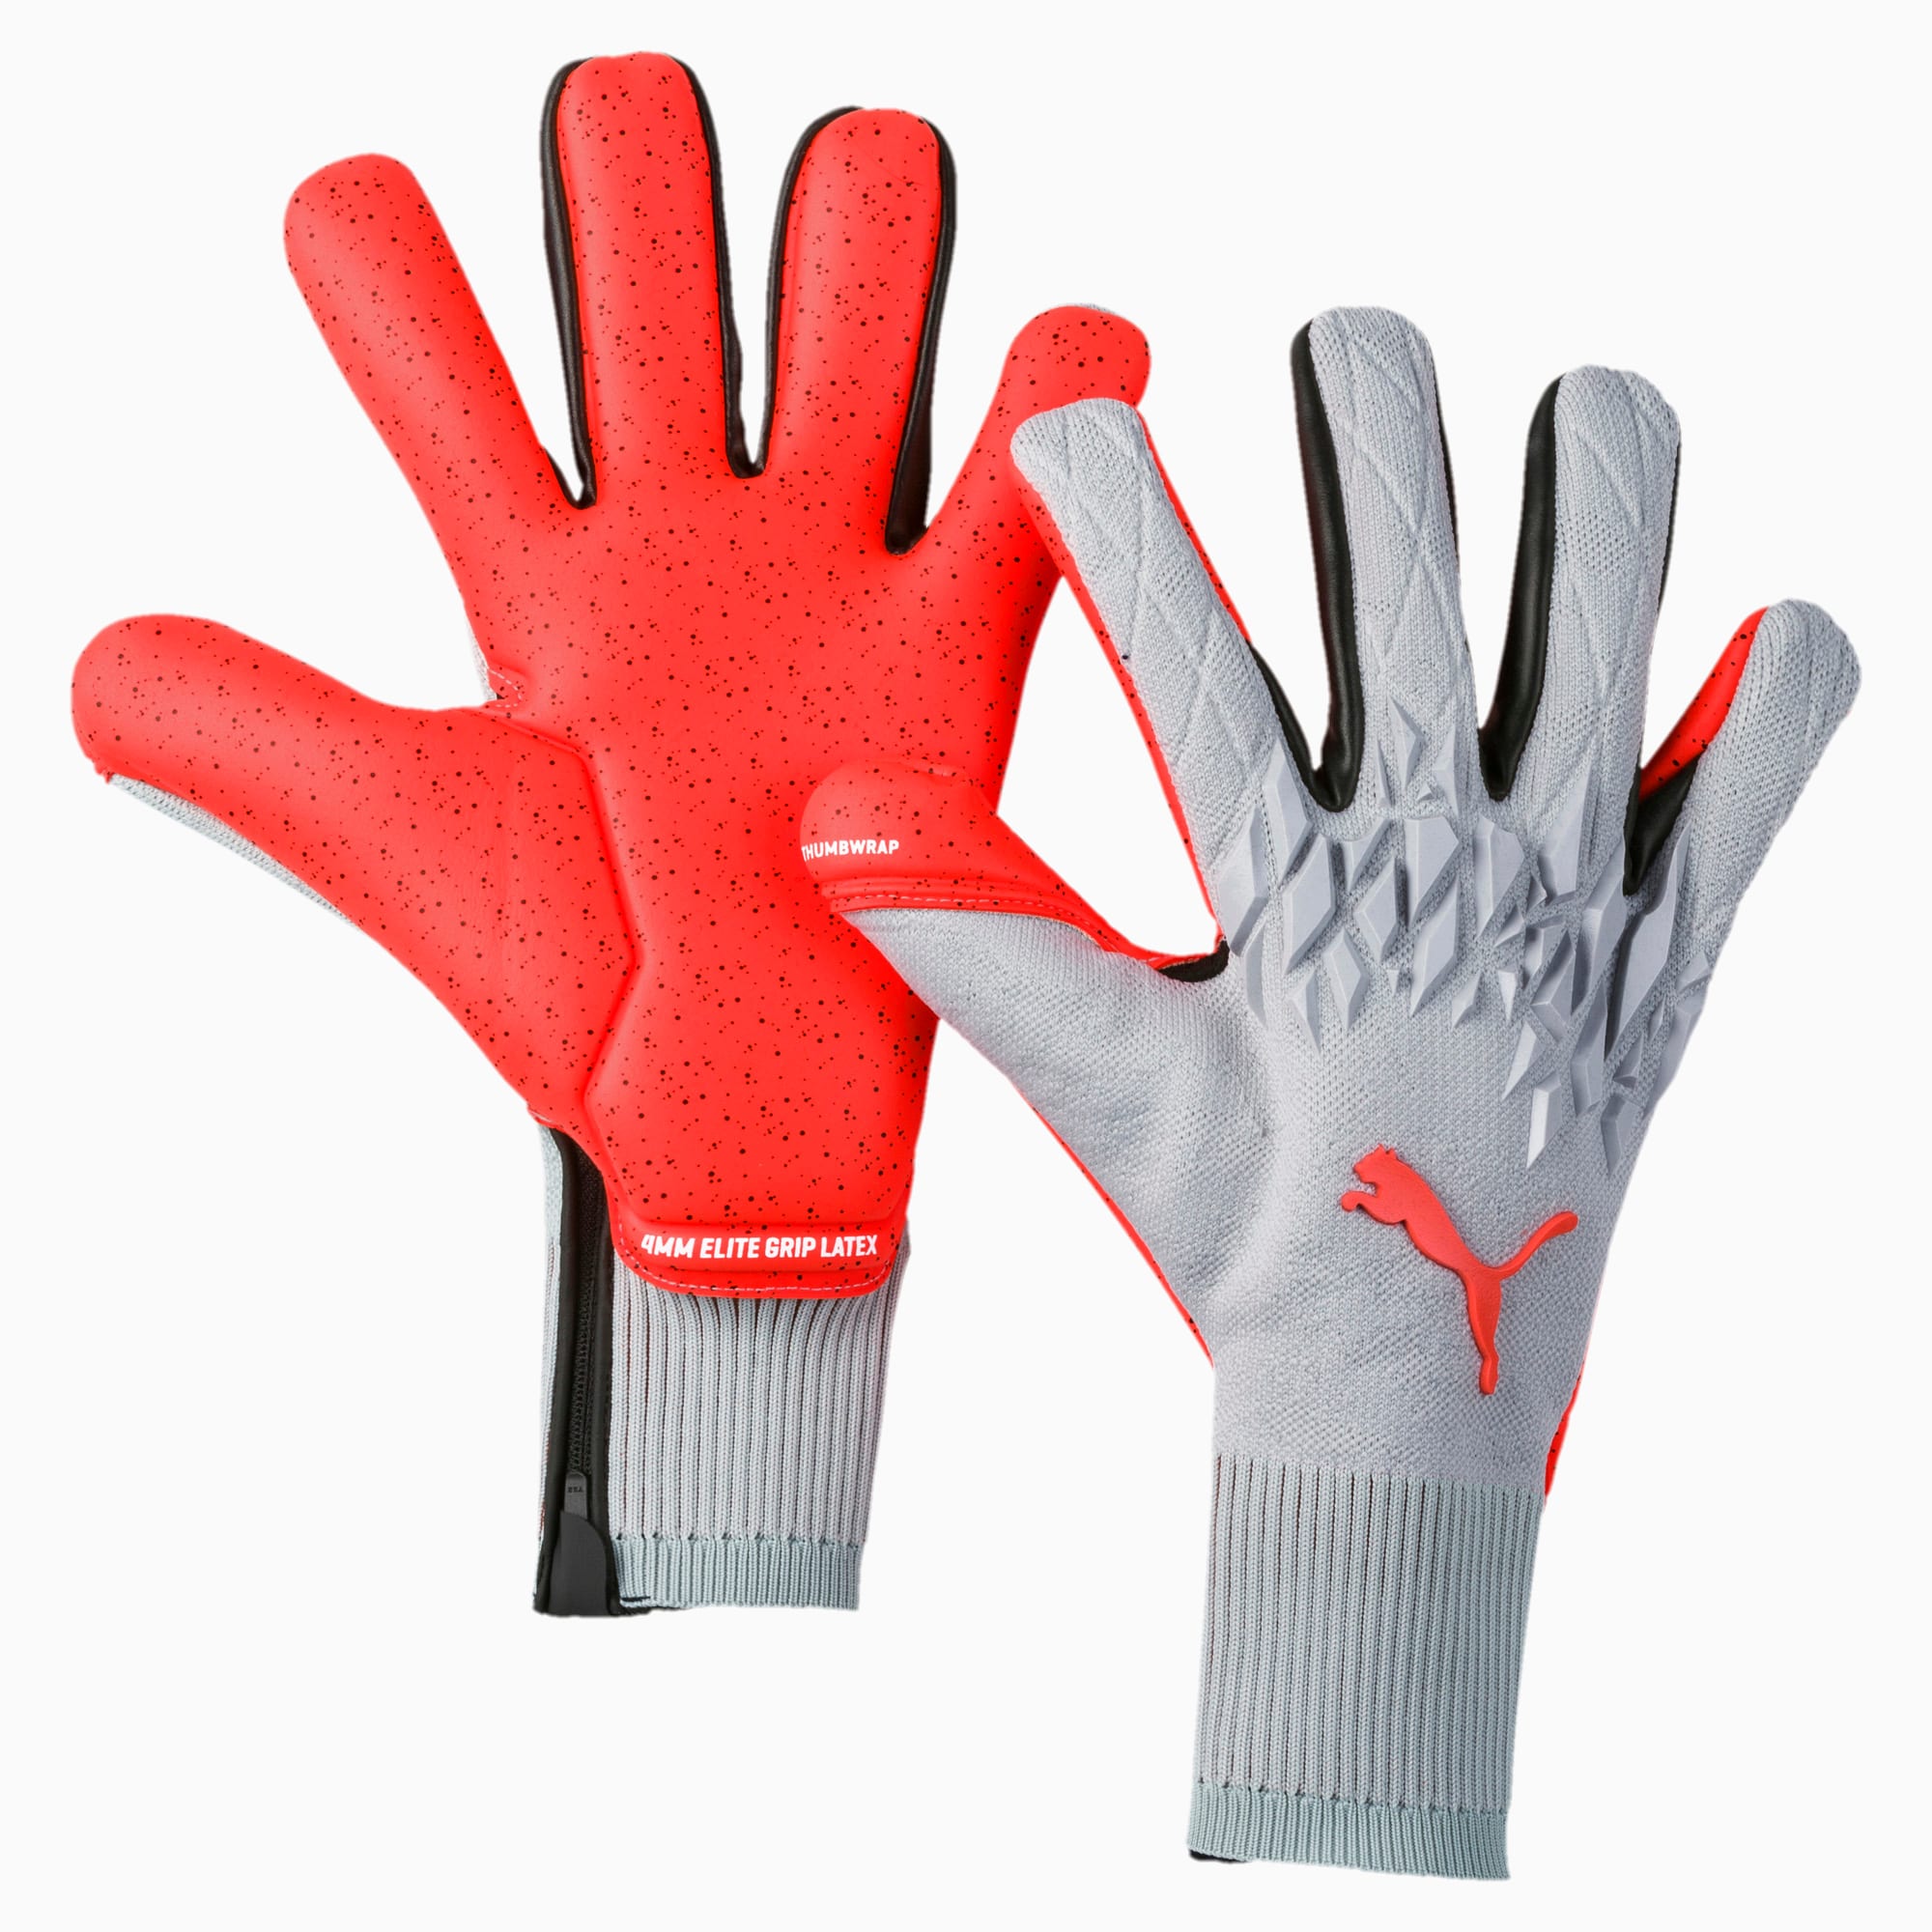 FUTURE Grip 19.1 Goalkeeper Gloves 